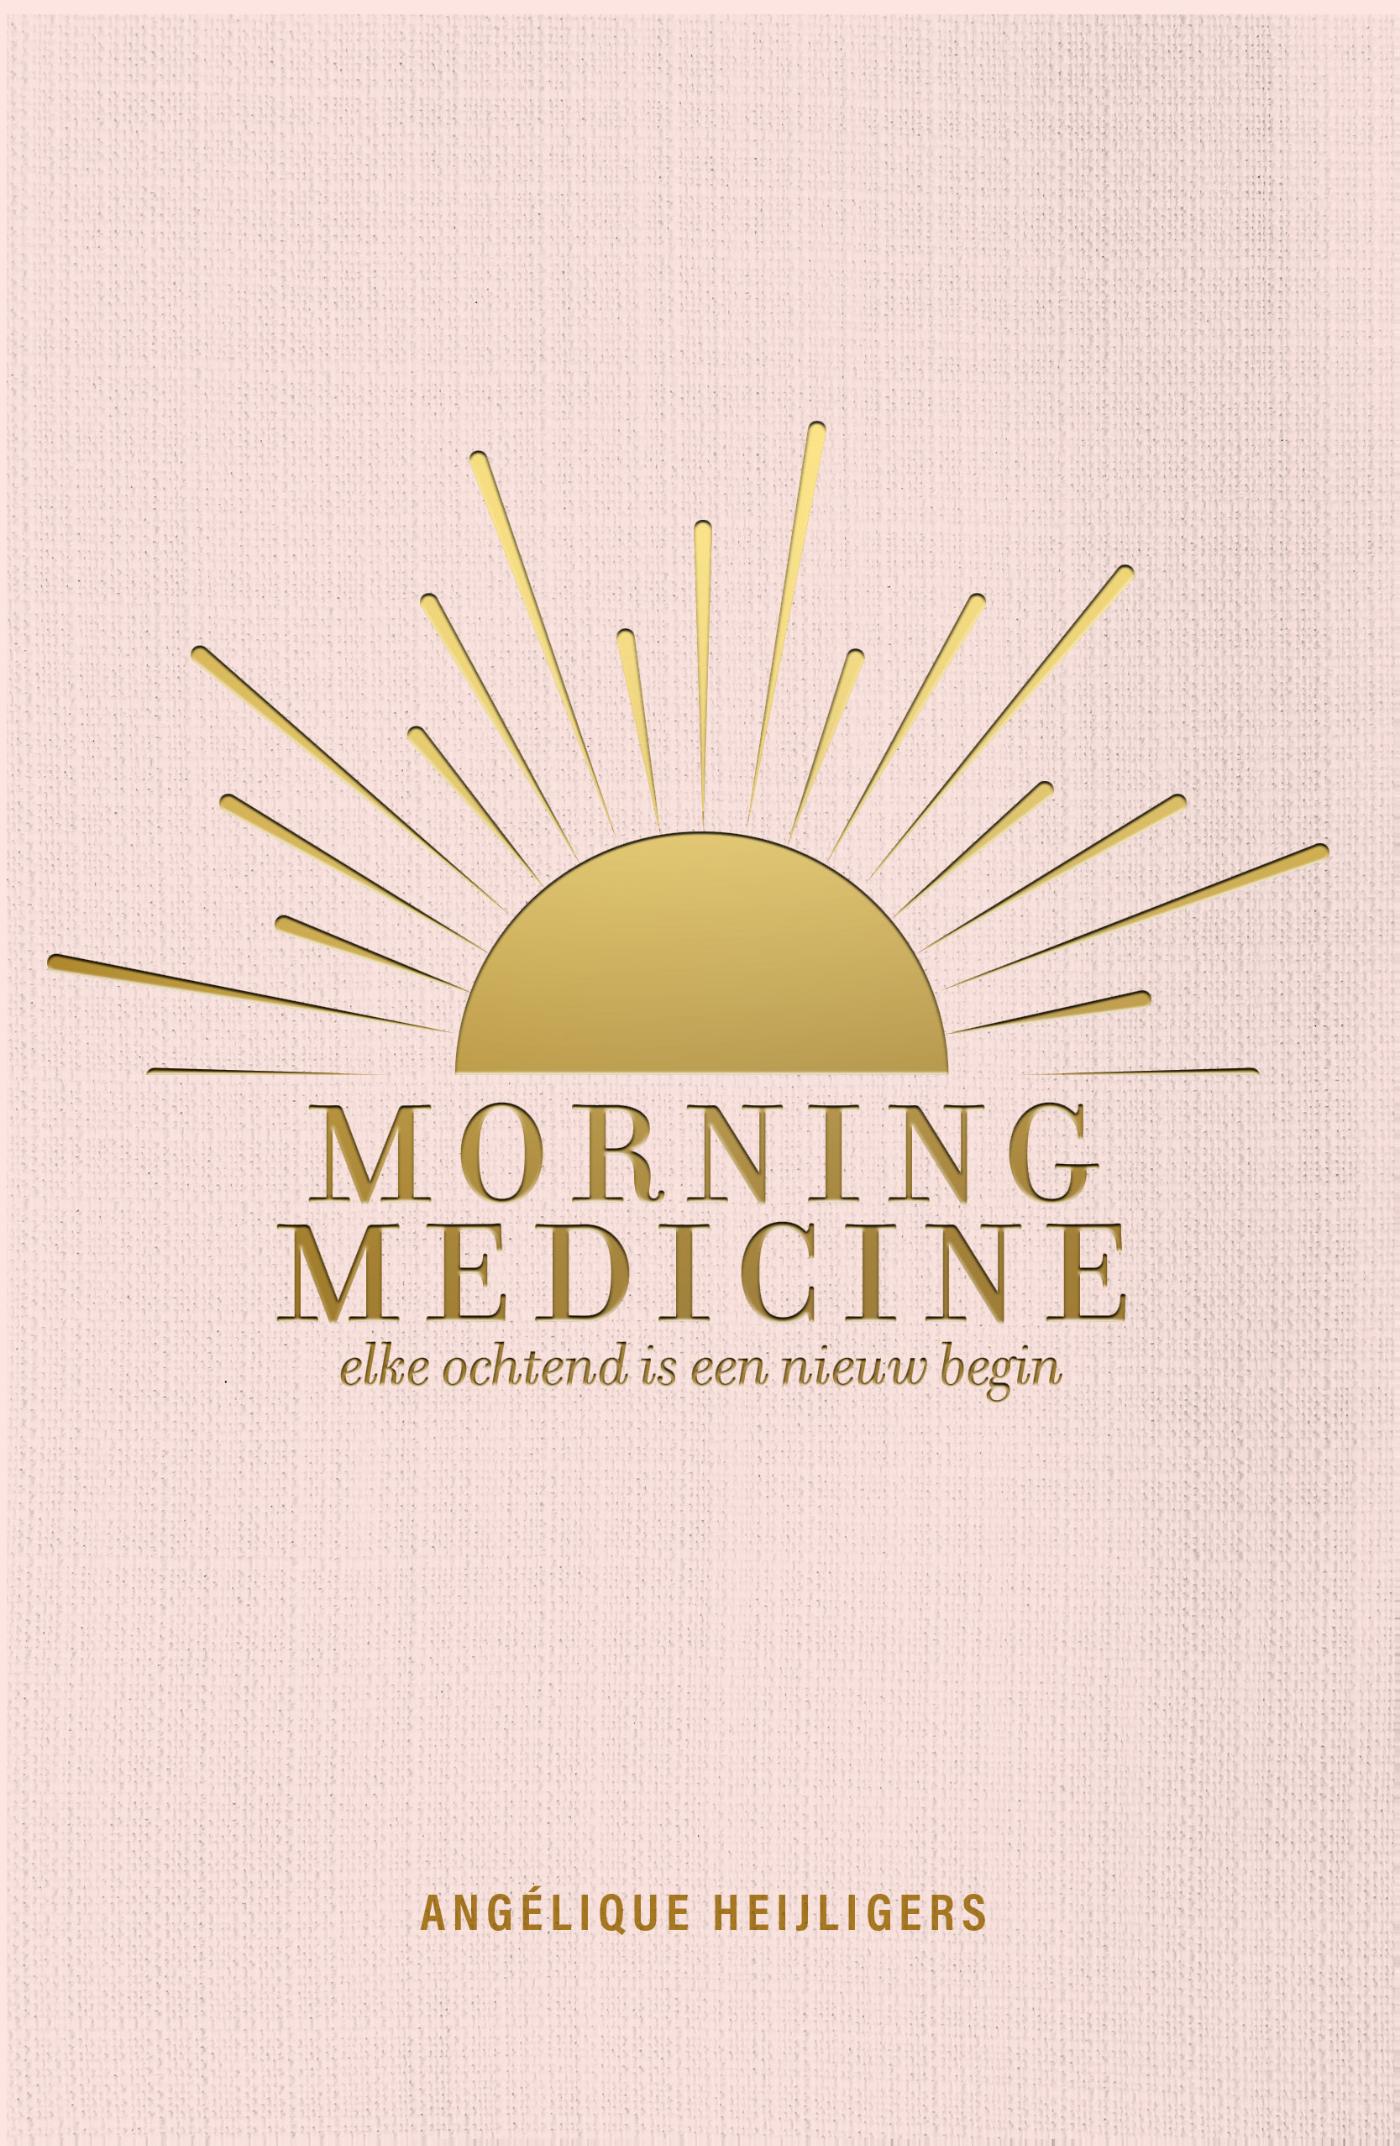 Morning Medicine (Ebook)